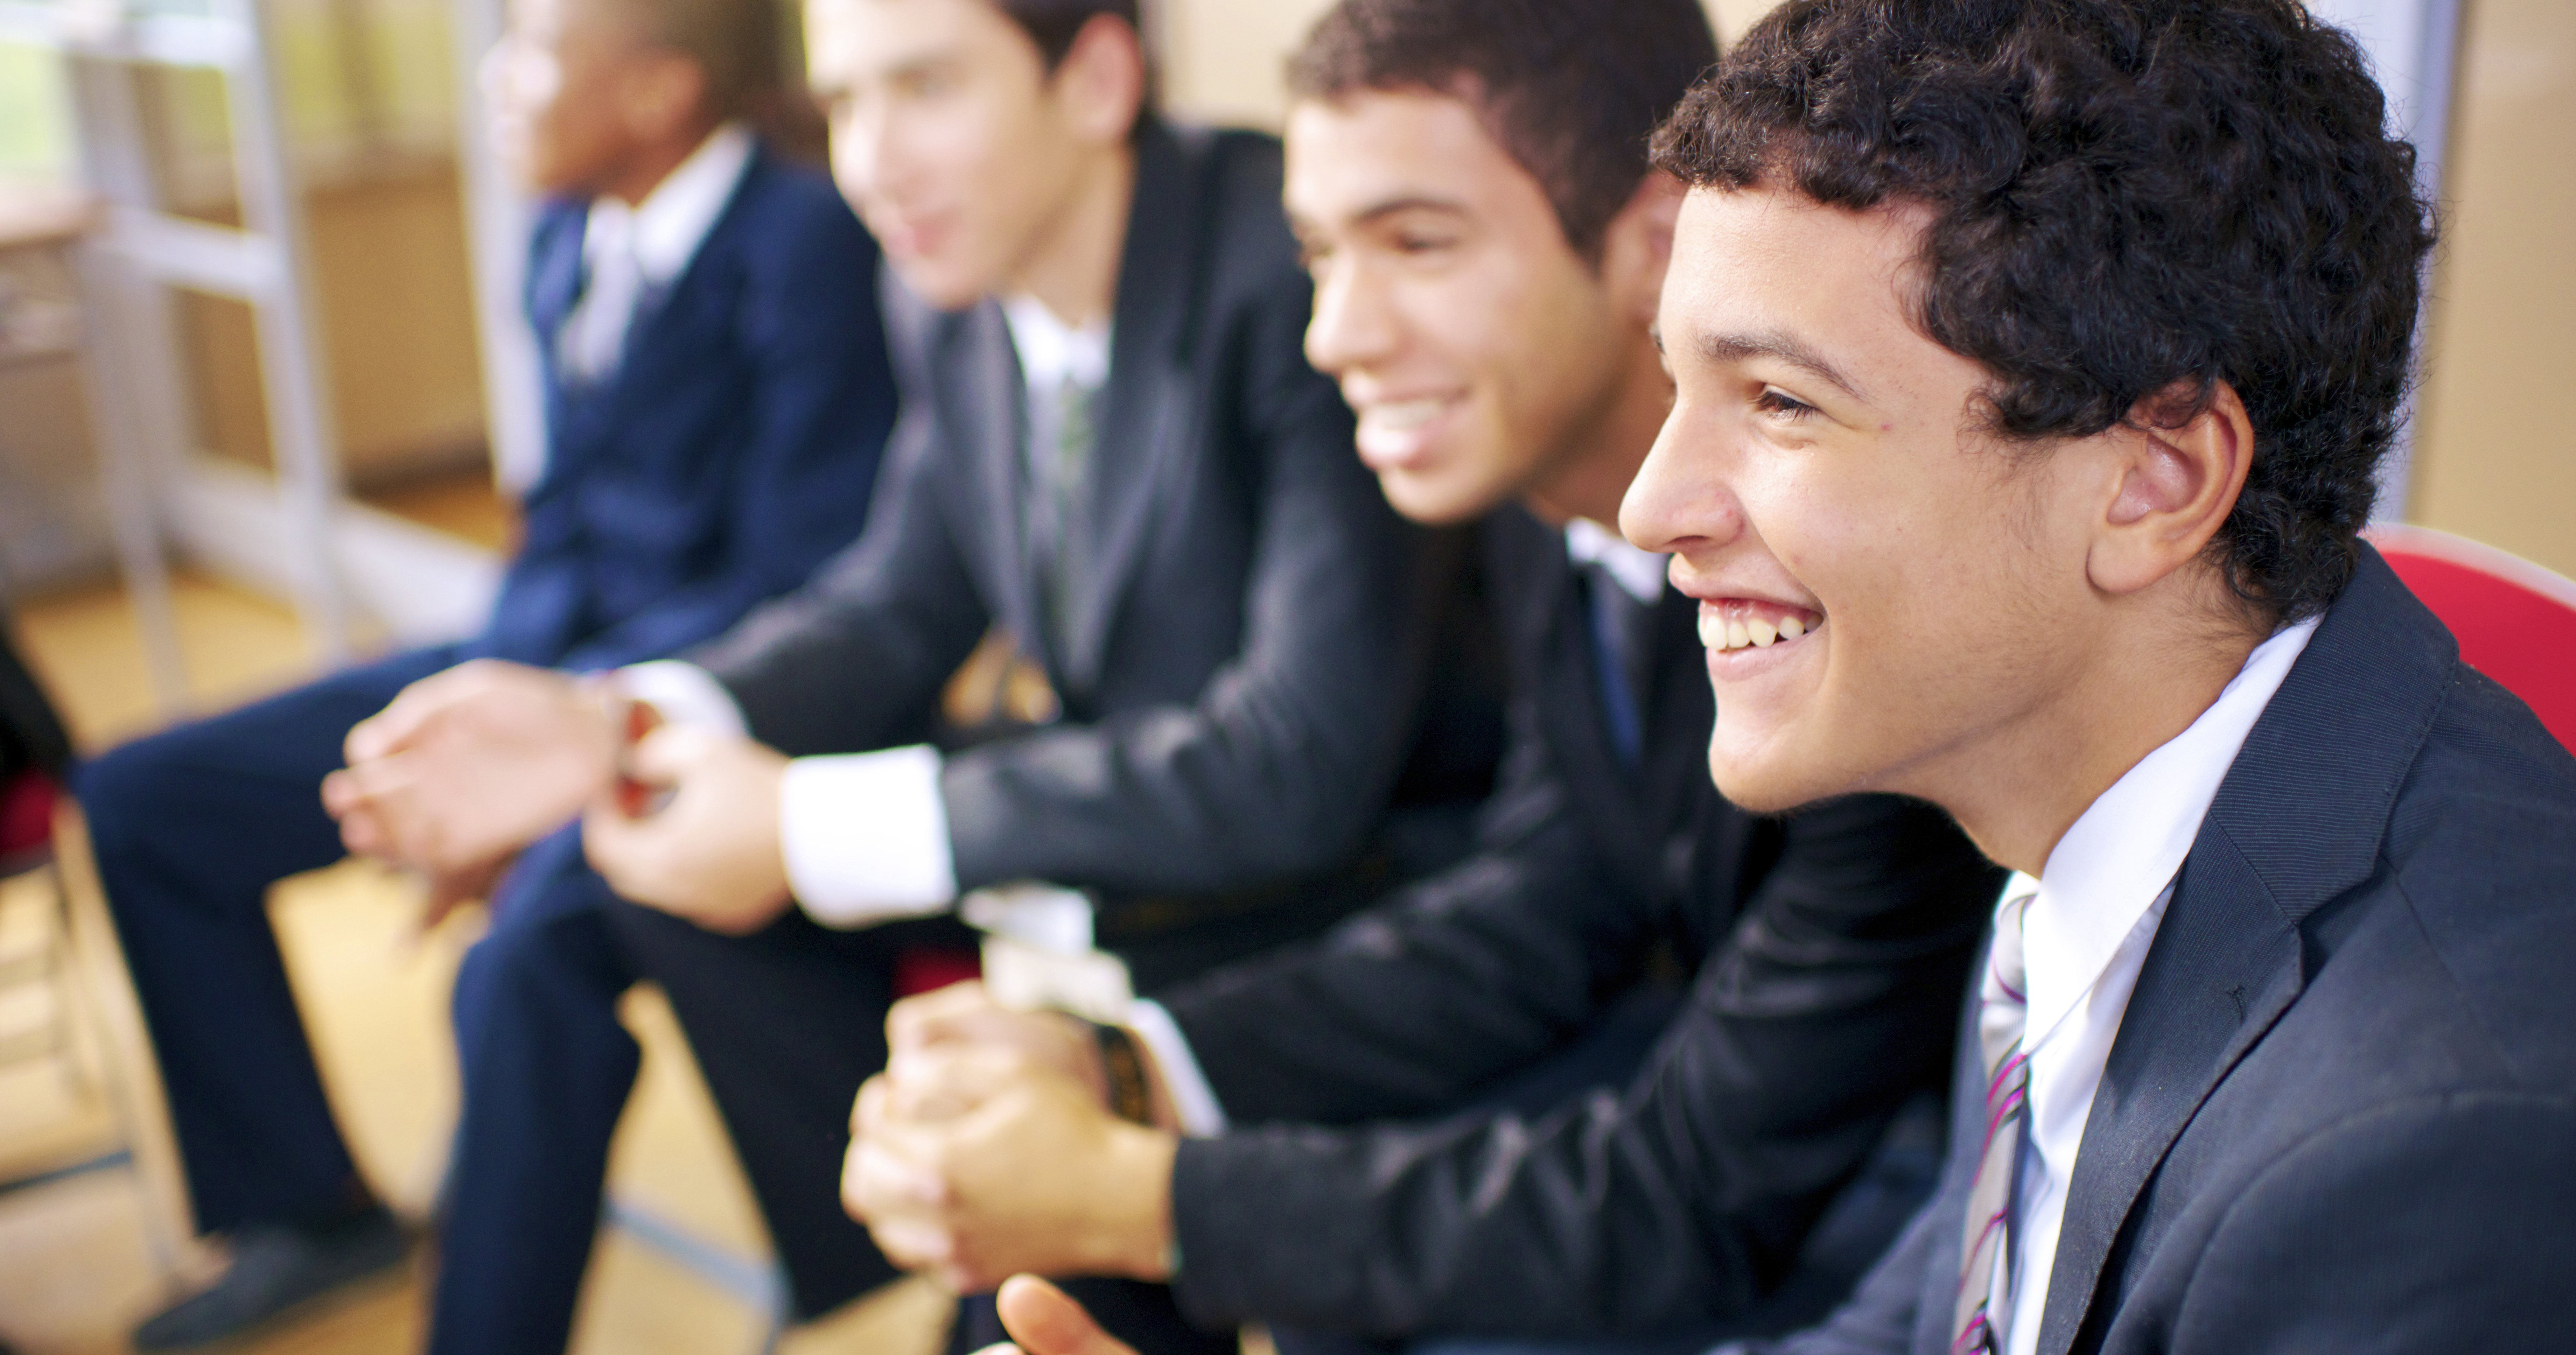 Young men attending priesthood quorum meetings.